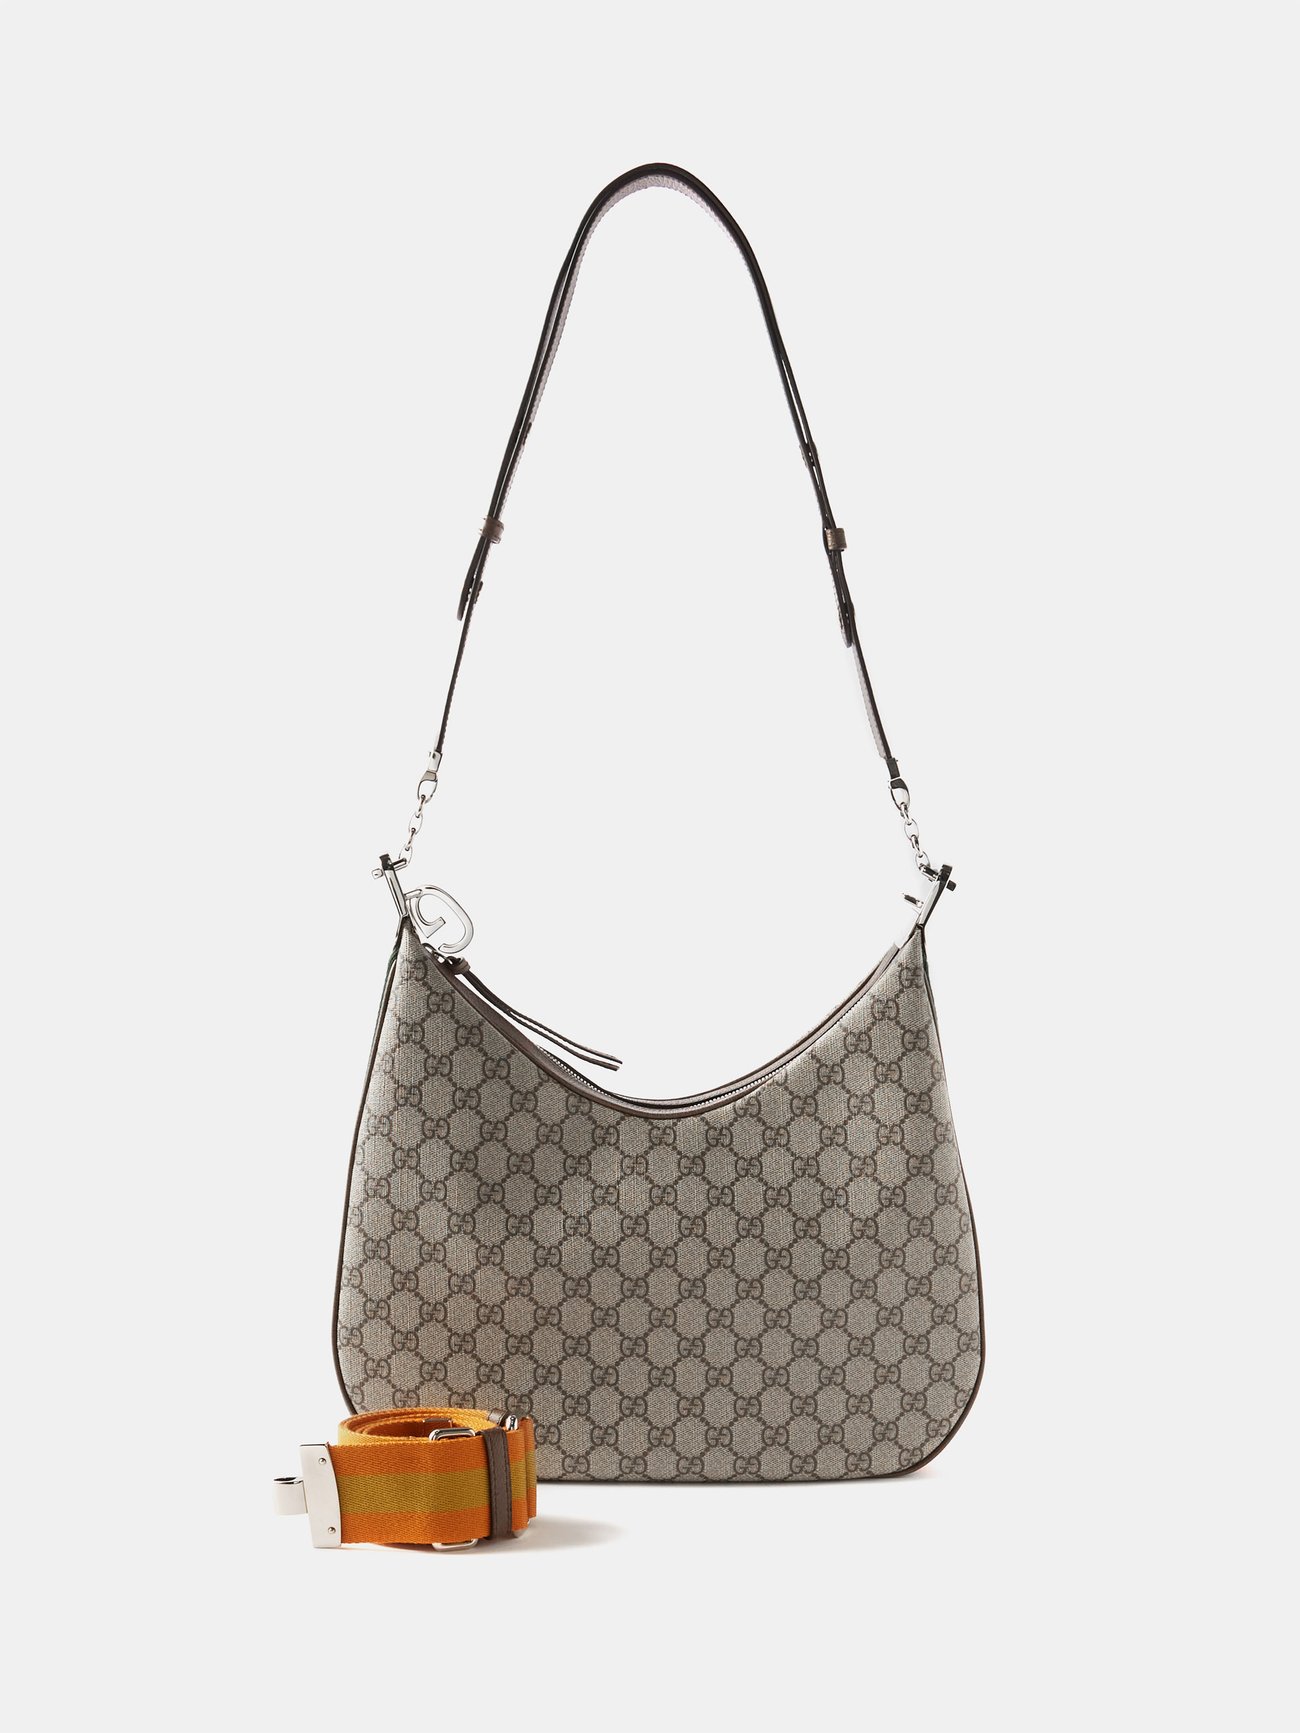 Gucci Large GG Supreme Canvas Hobo Handbag in Beige